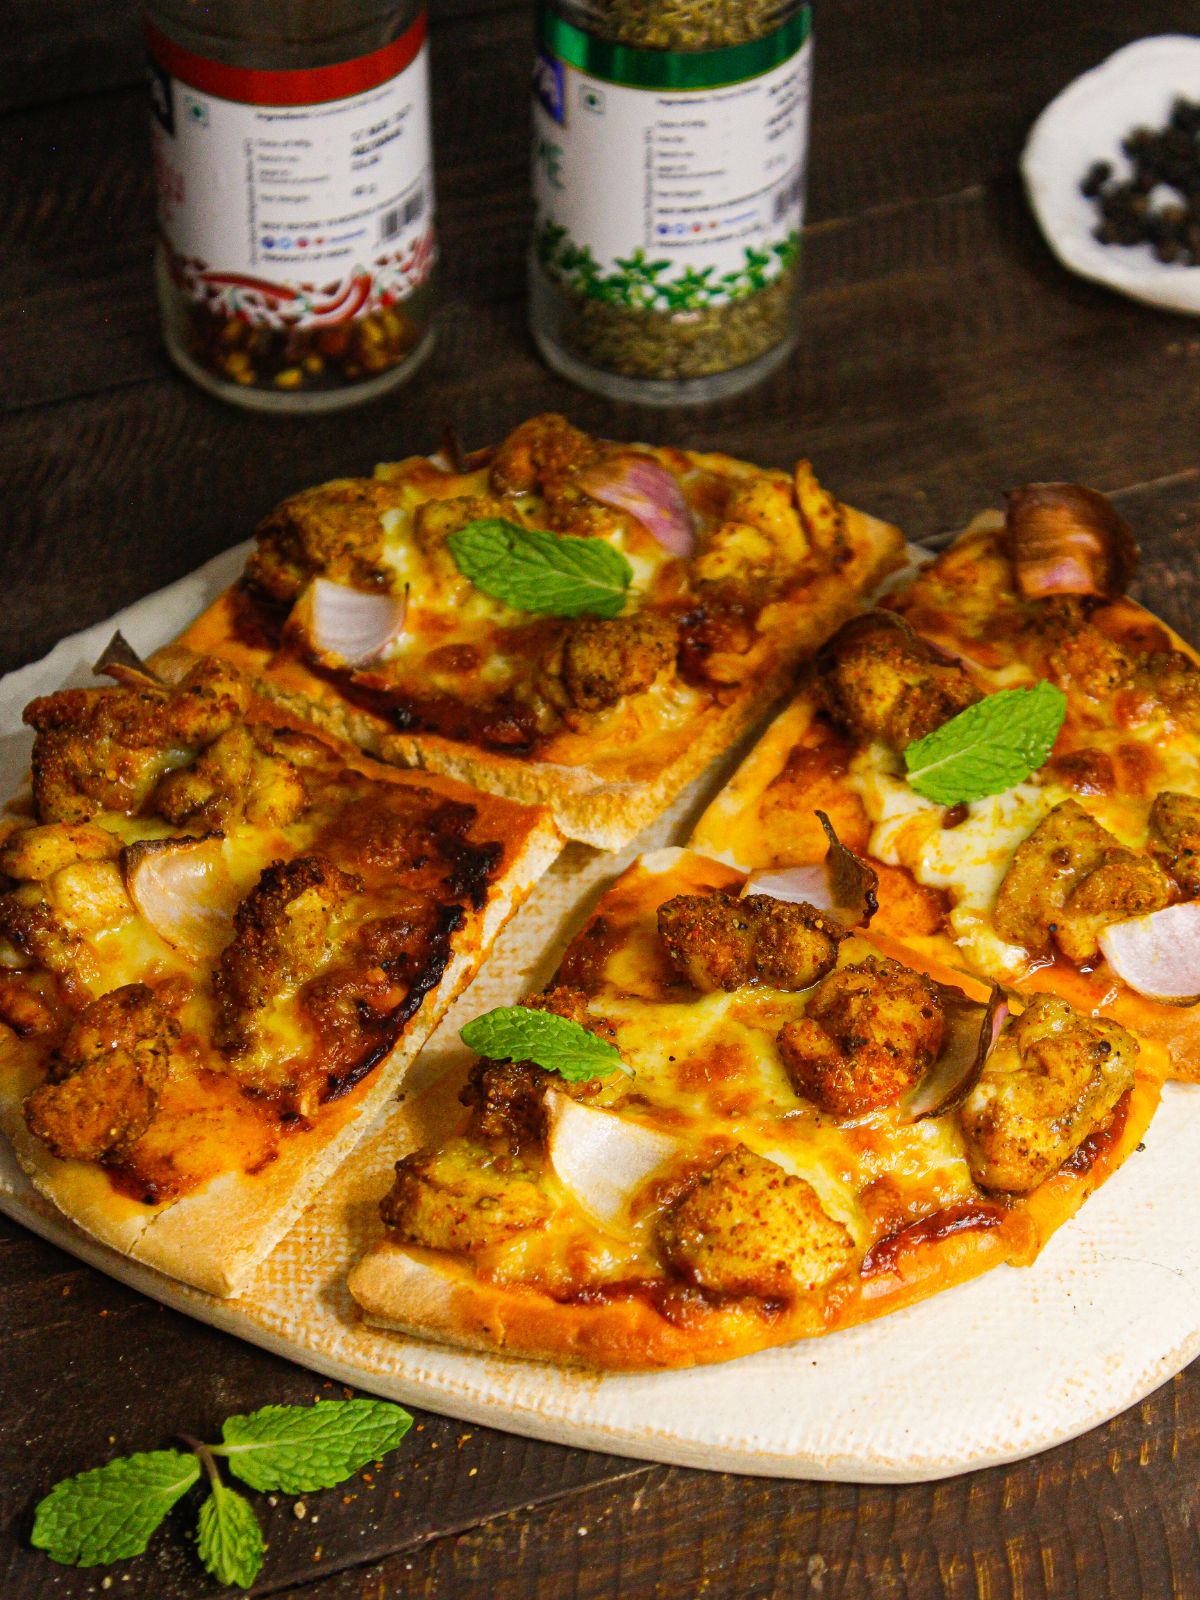 Spicy Tandoori Chicken Pizza ready to enjoy with chutney or dip